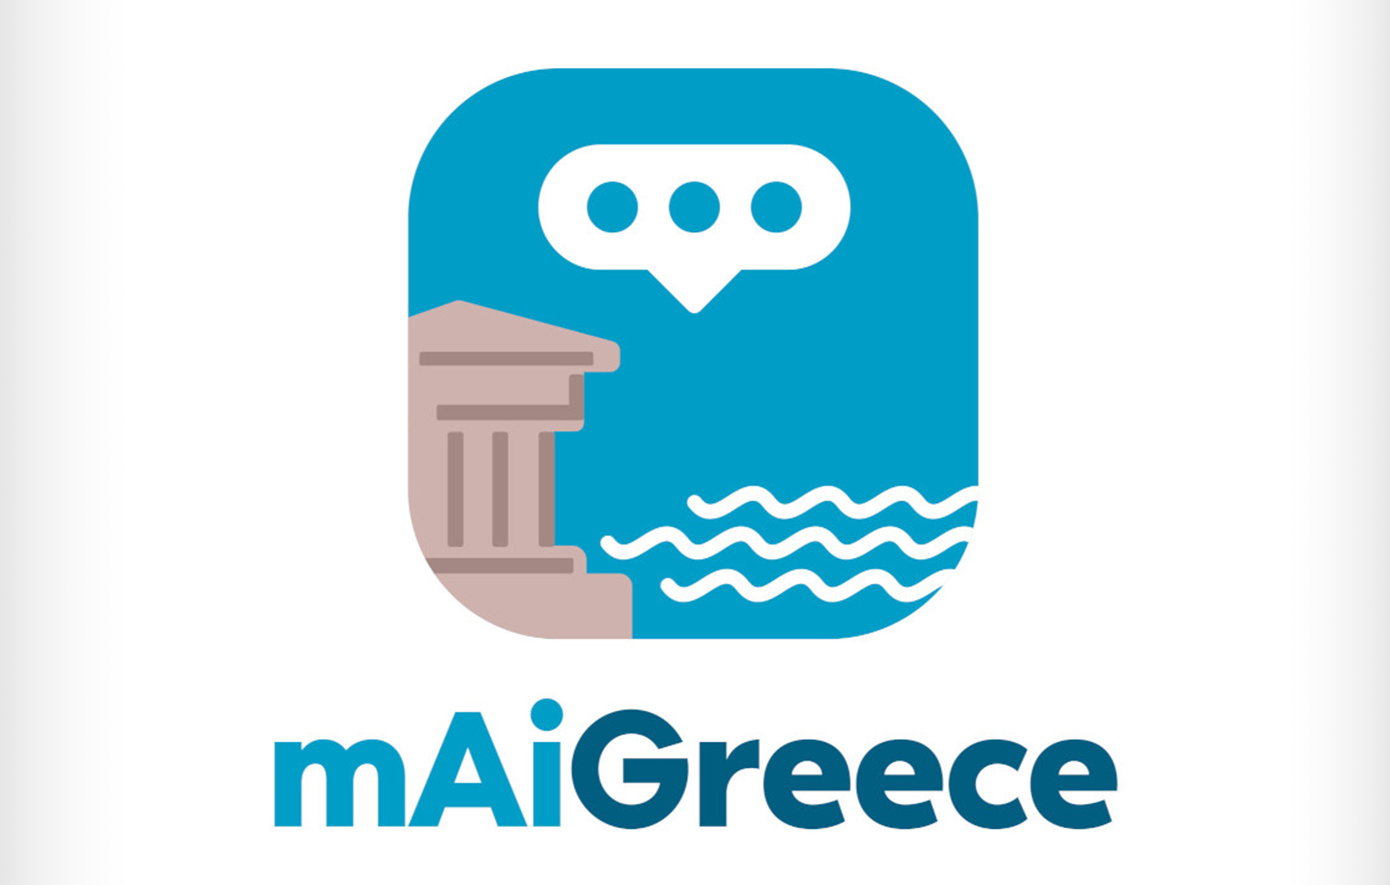 mAiGreece: Ο ψηφιακός βοηθός Τεχνητής Νοημοσύνης για τις διακοπές στην Ελλάδα